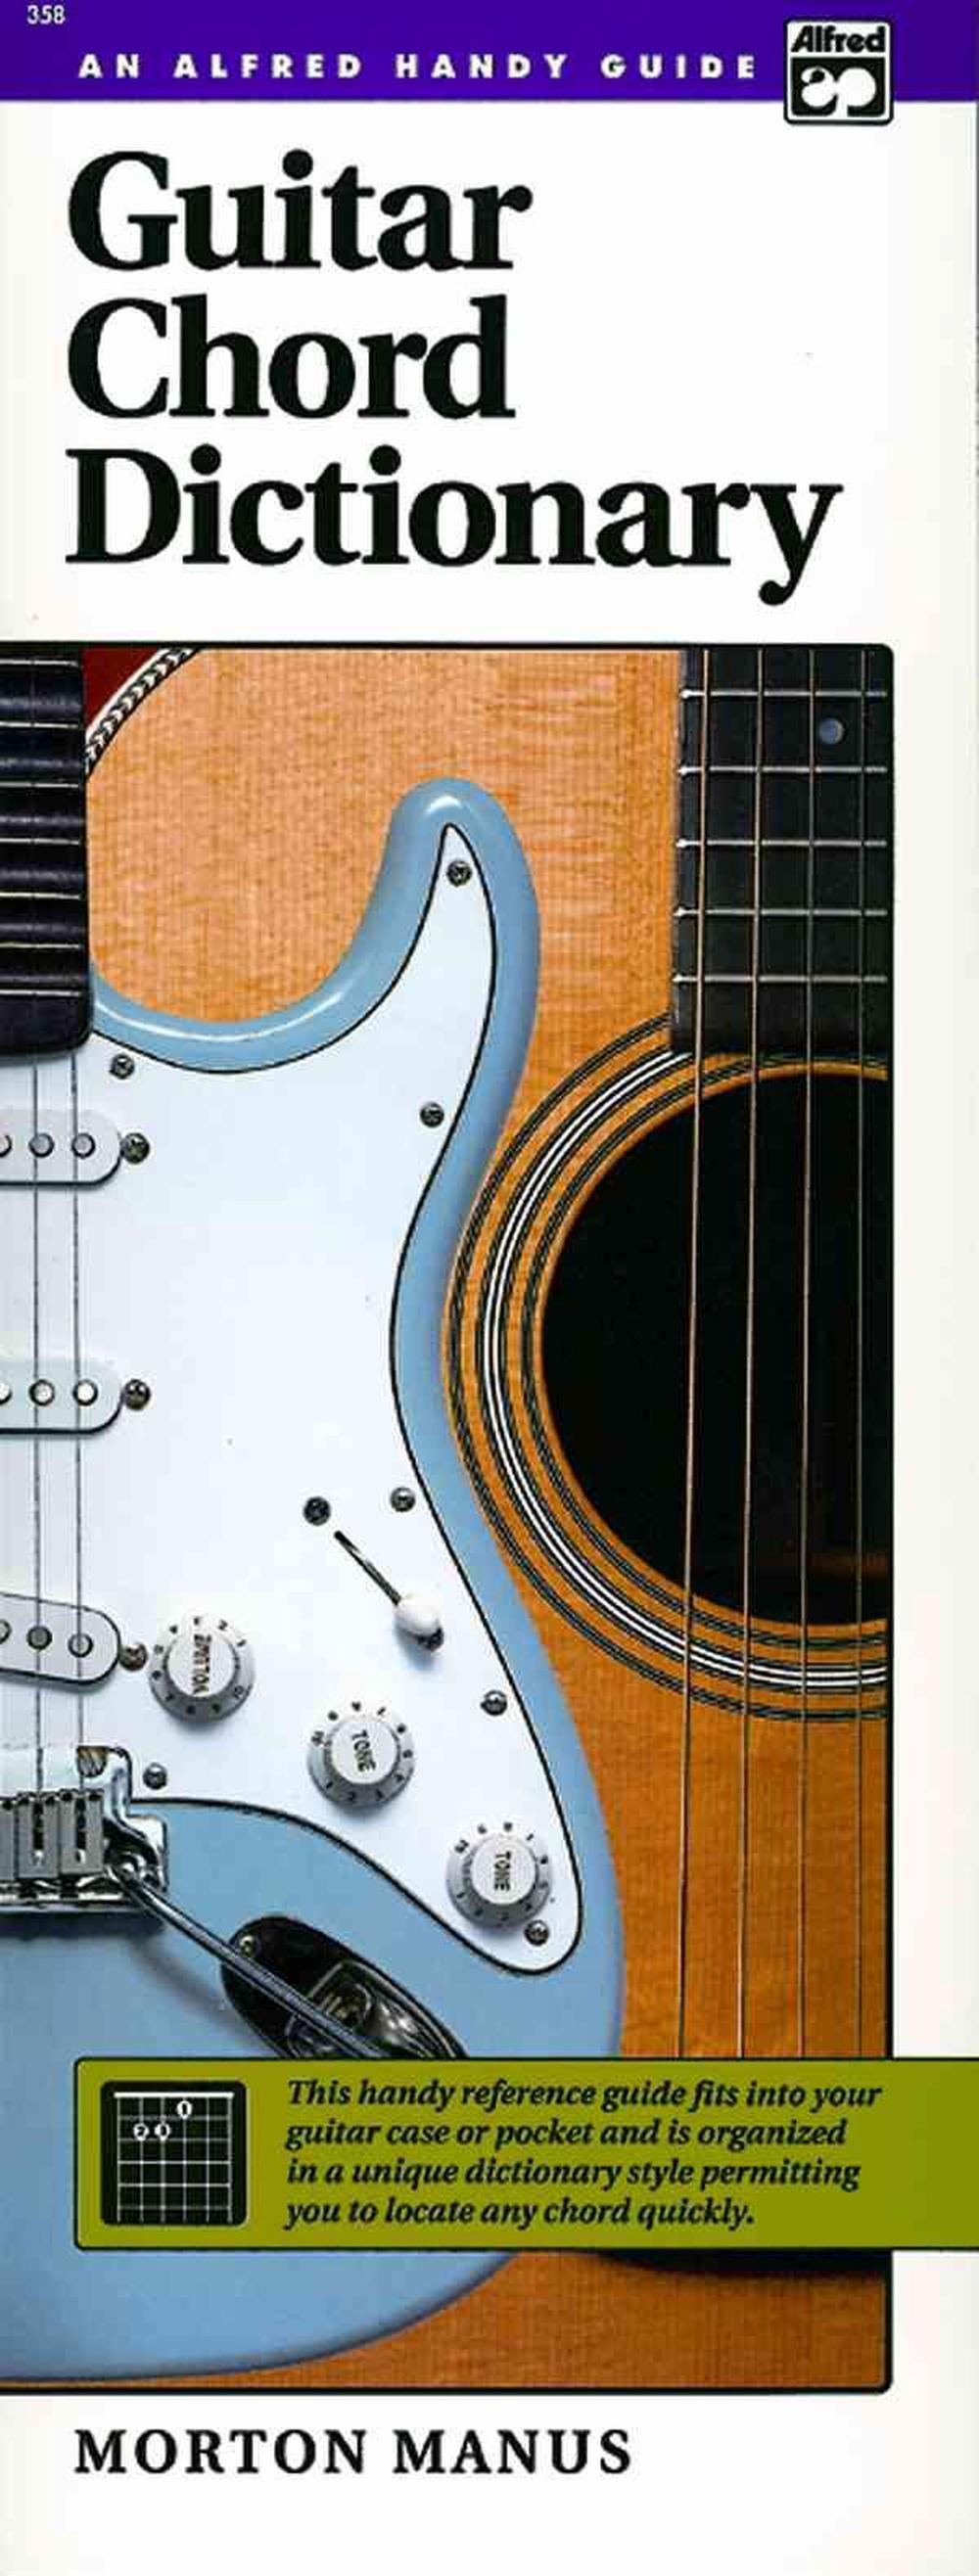 1975 guitar chord dictionary by morton manus